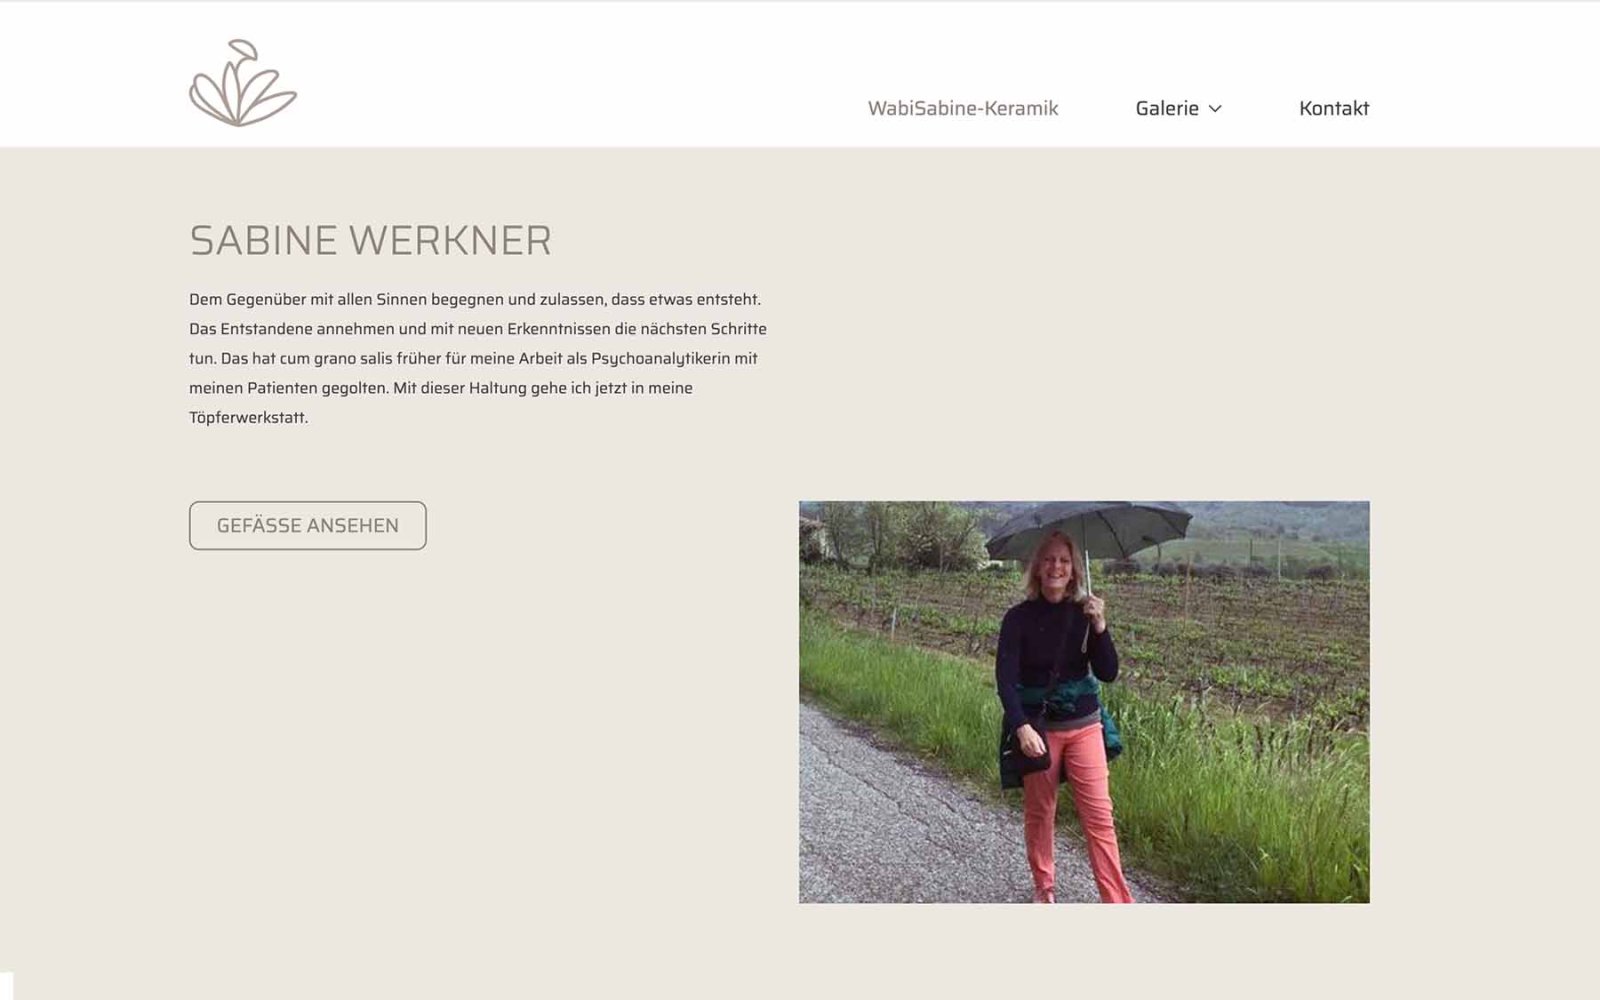 Website WabiSabine-Keramik, über Sabine Werkner